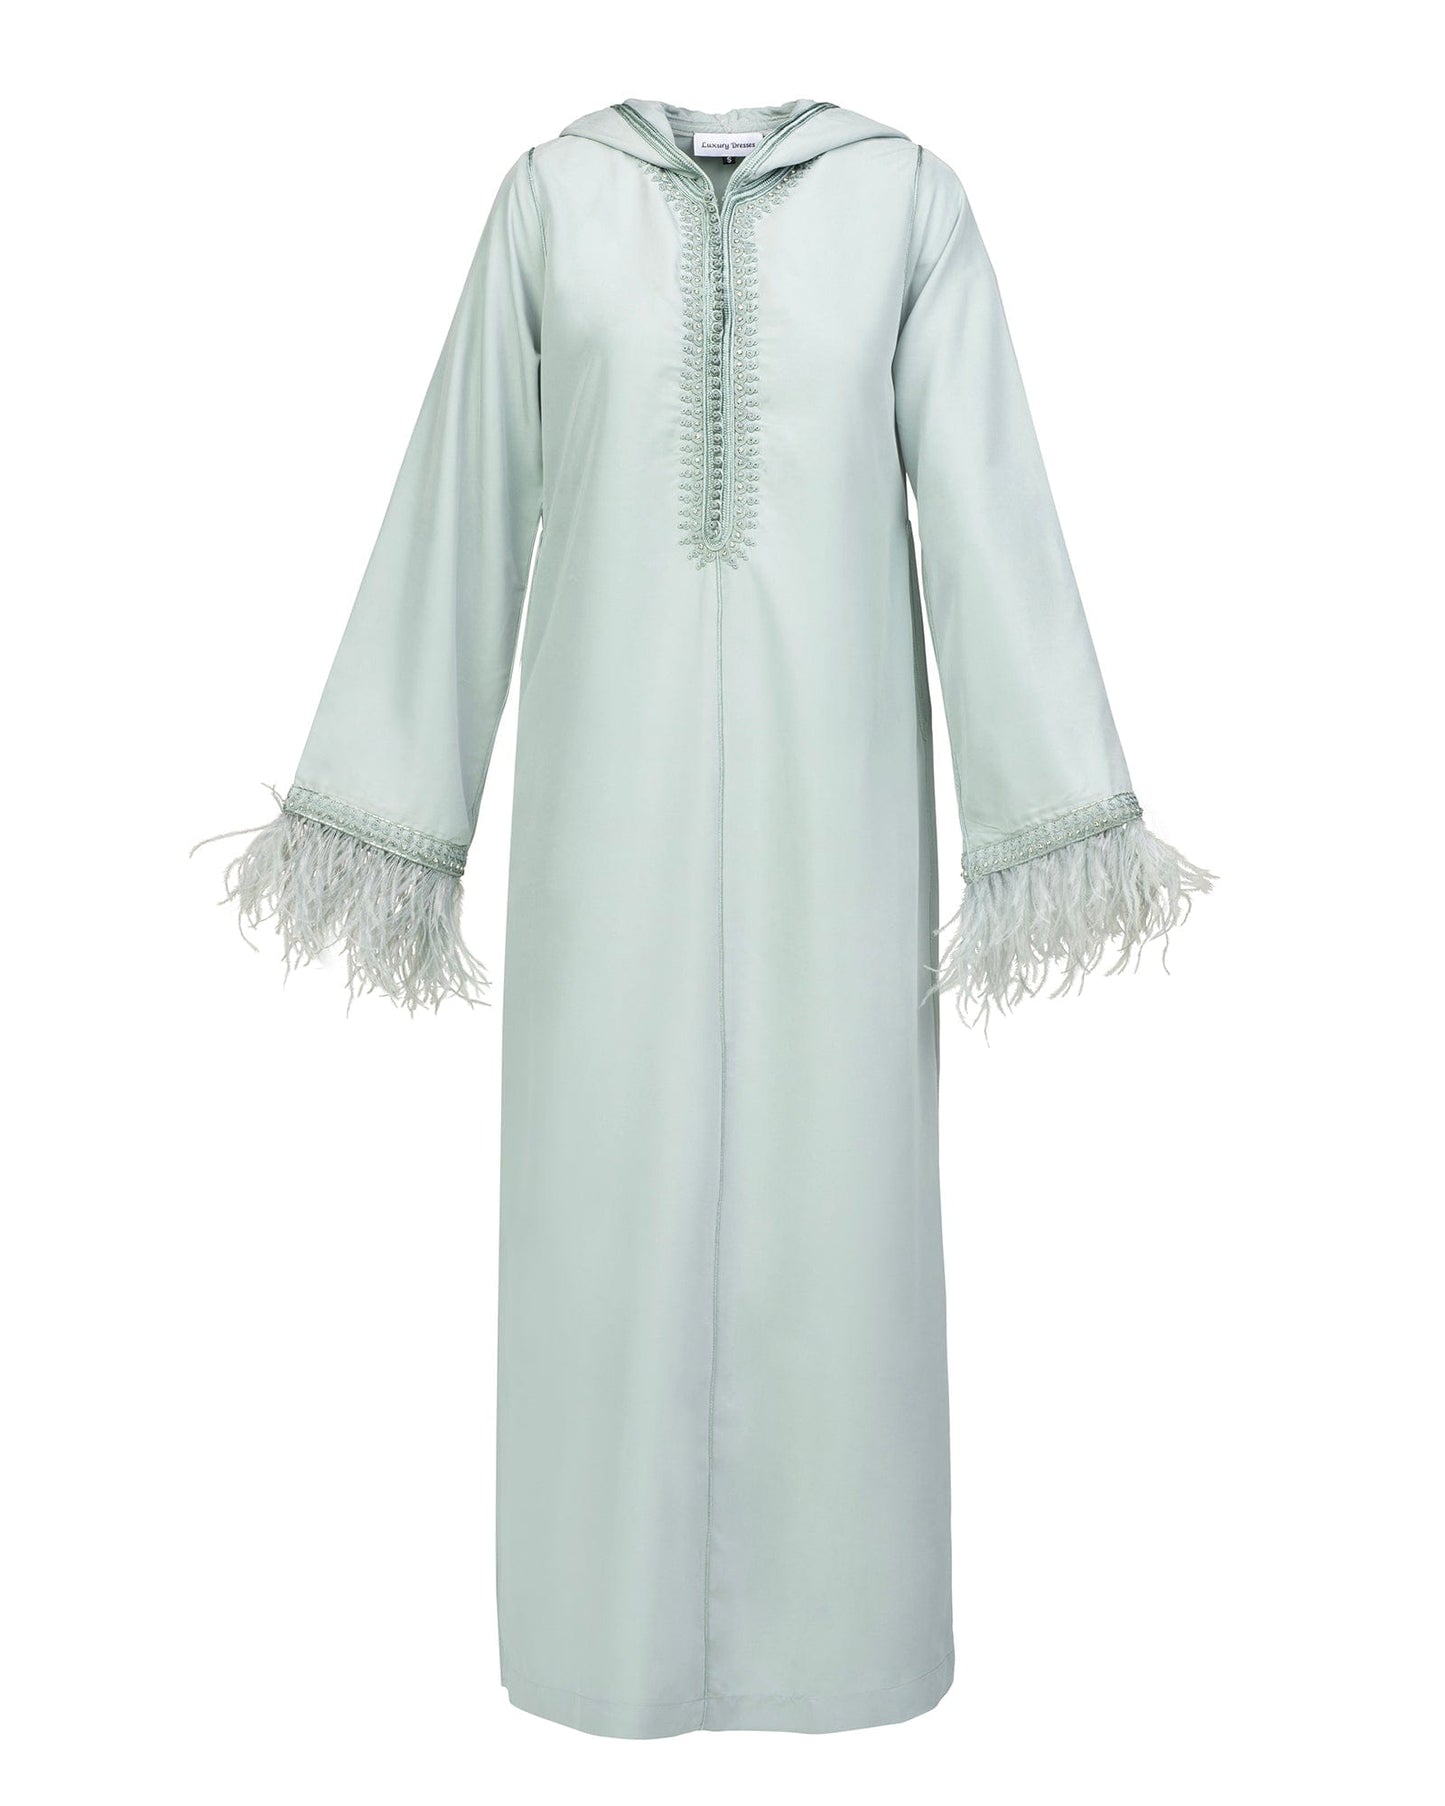 Sky jellaba, jalaba, djallaba, jelaba, marokkaanse jurk, eid outfit, eid jurk 